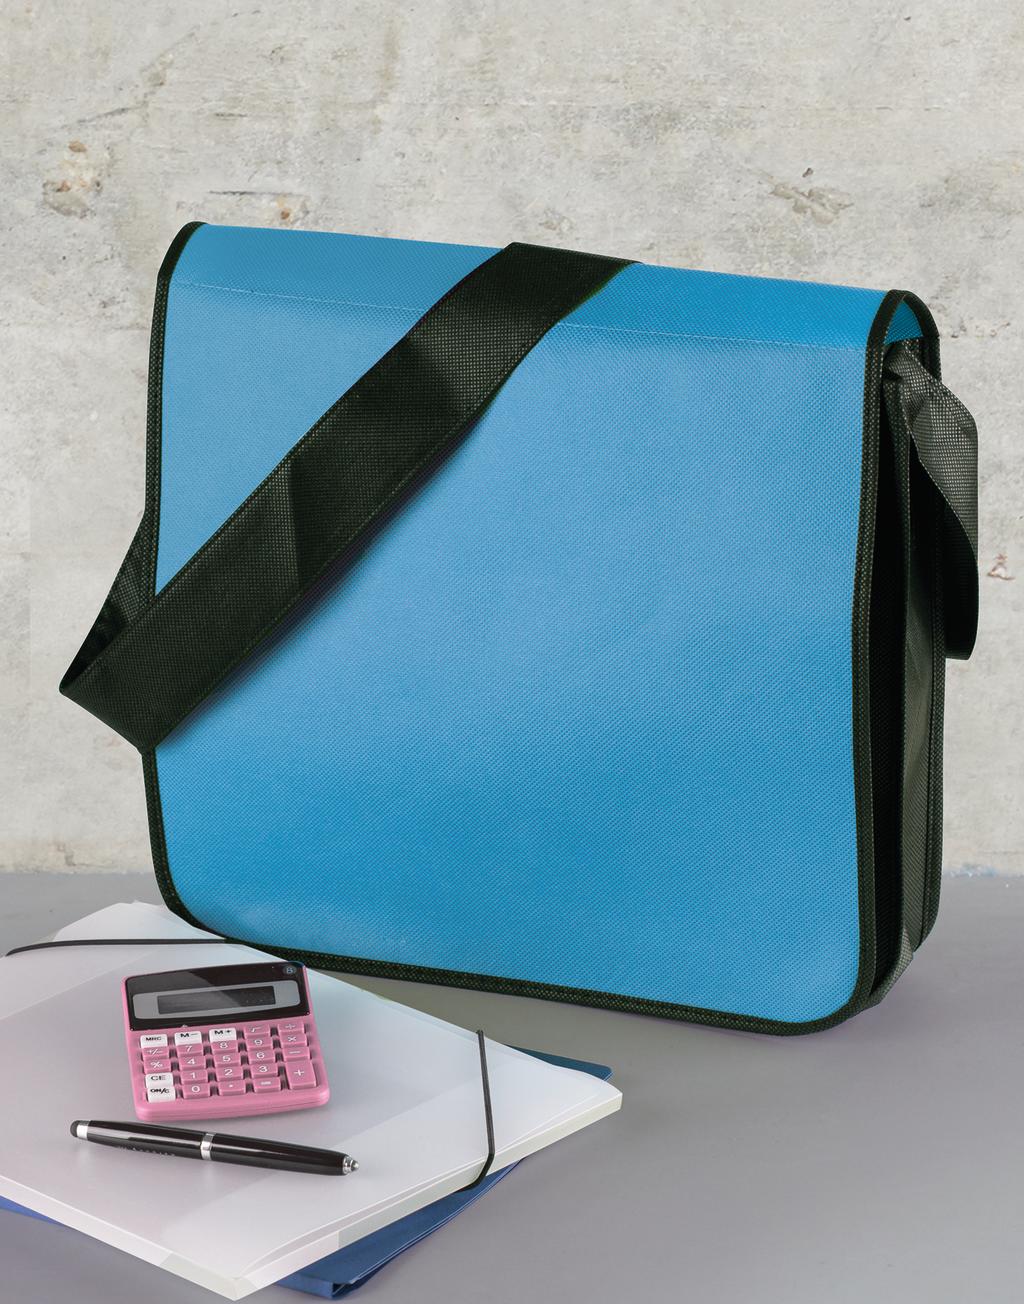  Messenger Bag in Farbe Mid Blue/Black